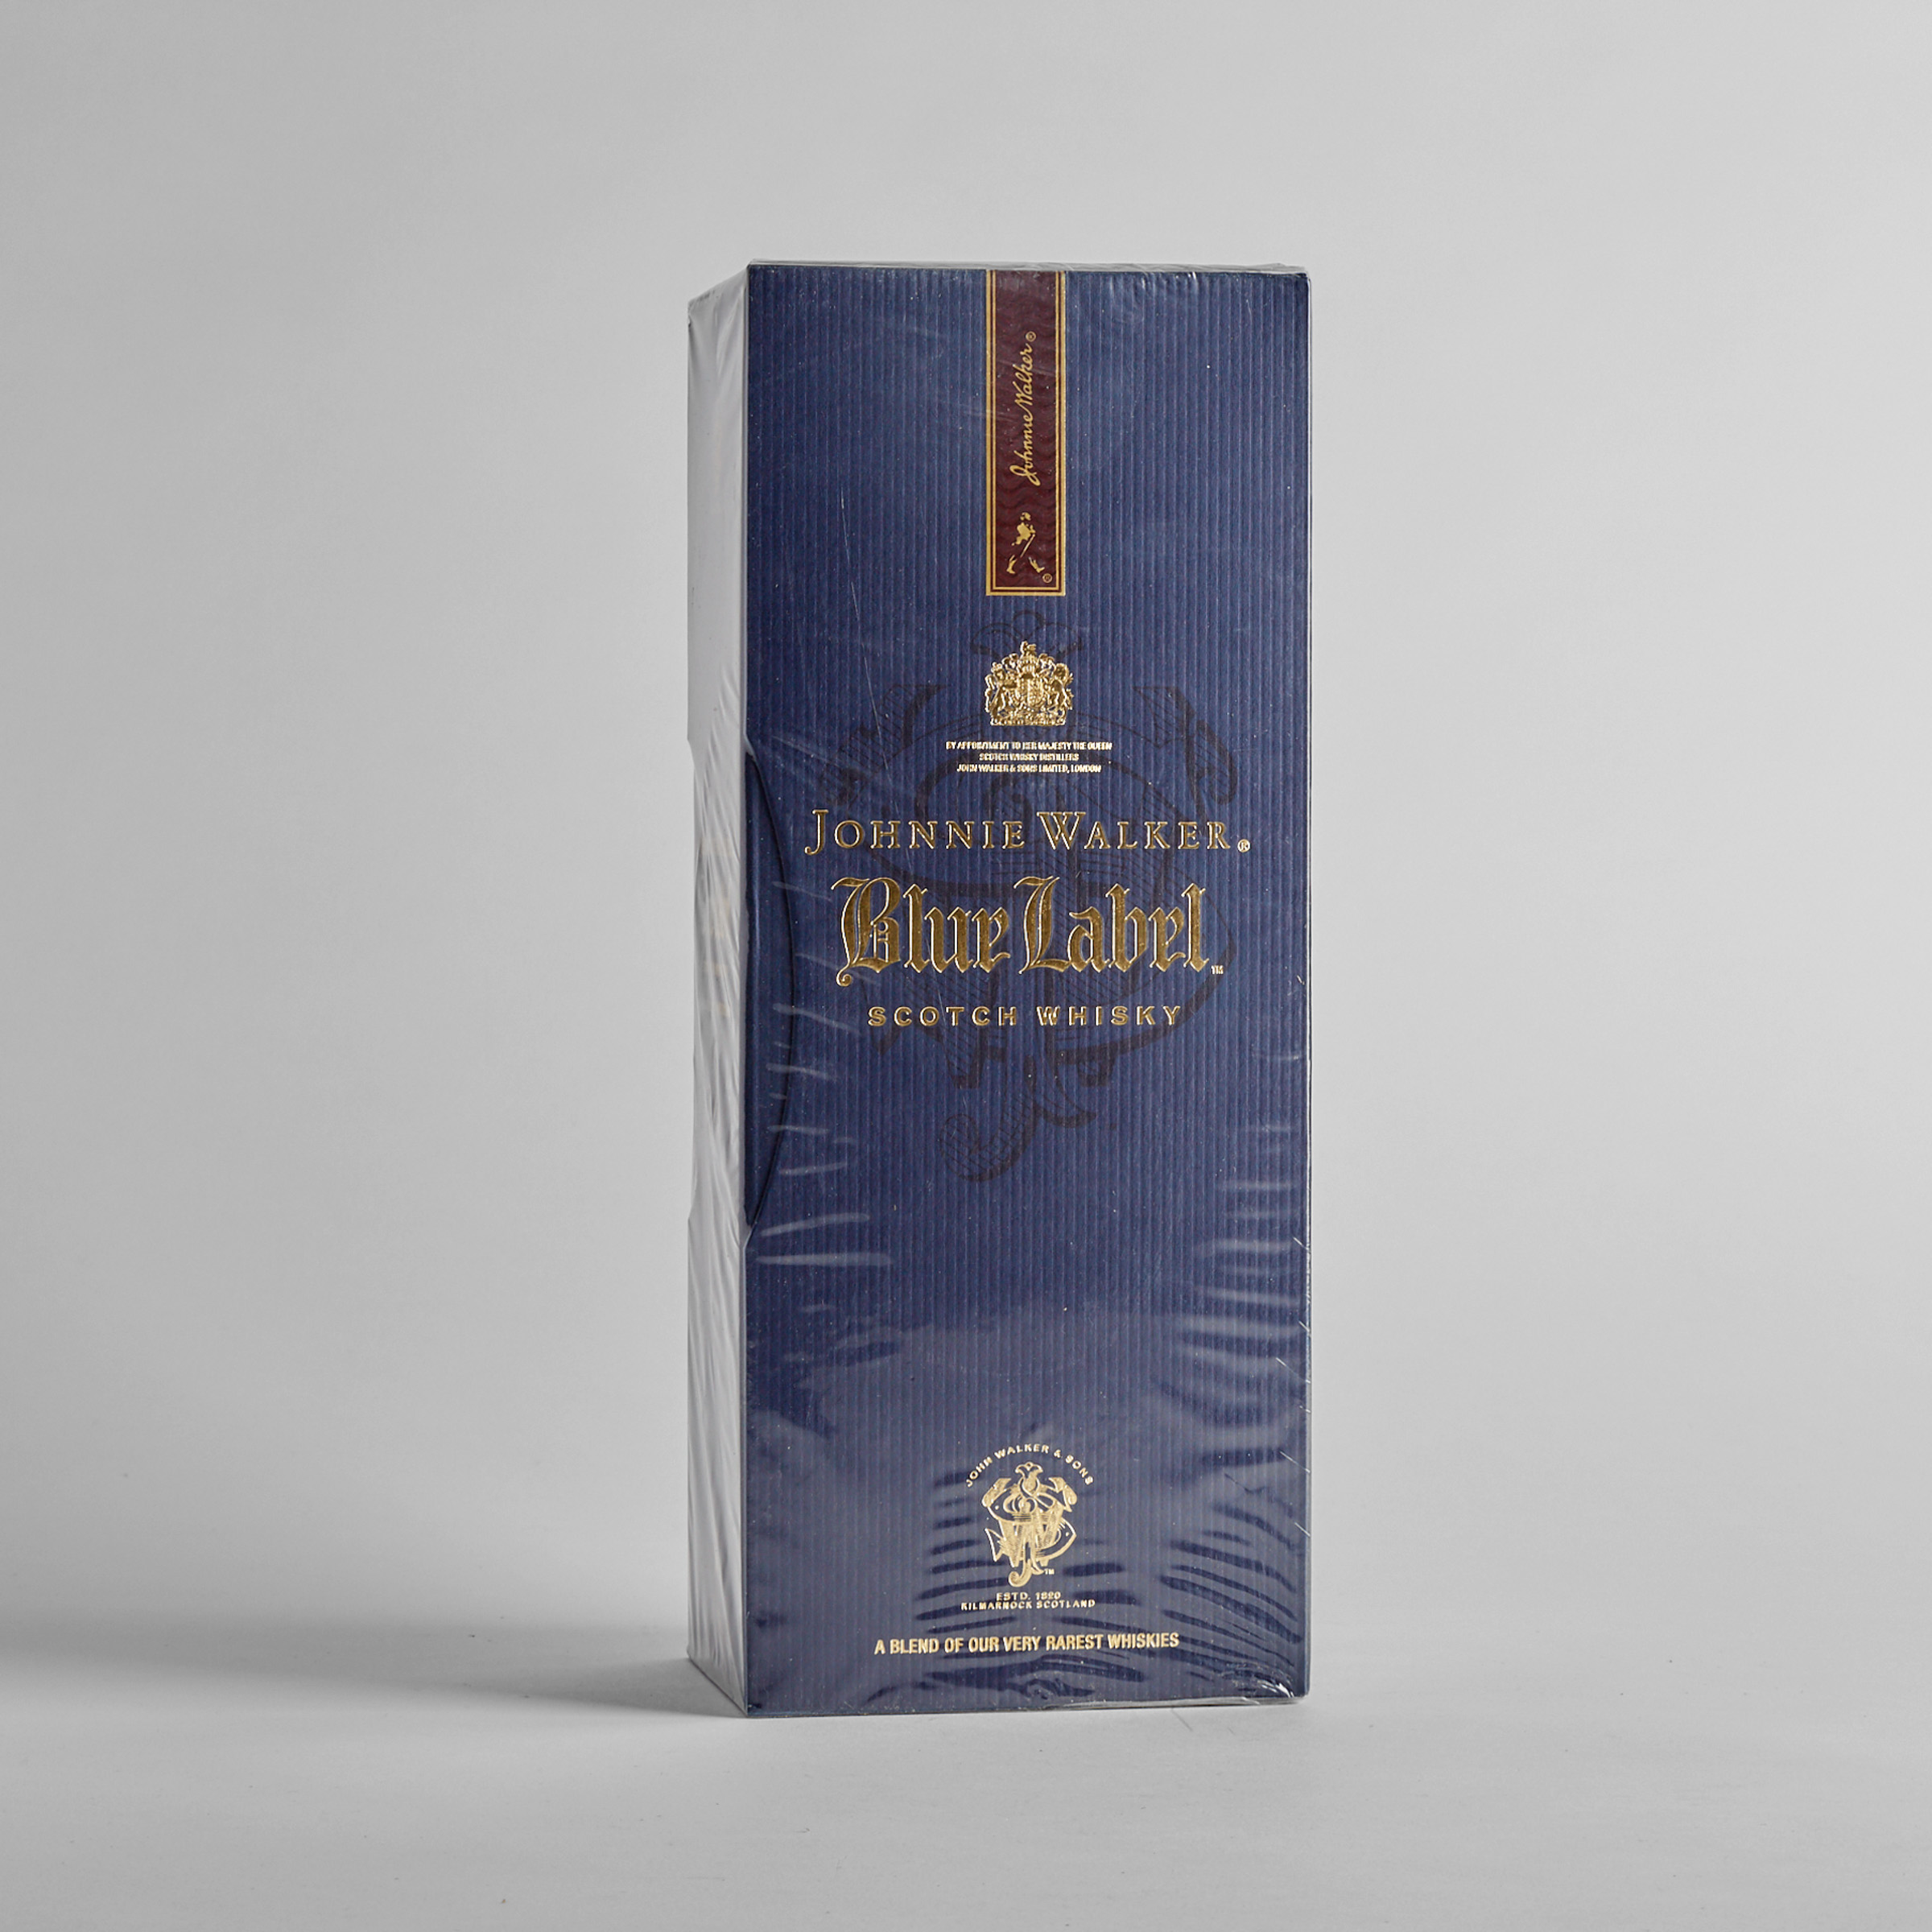 JOHNNIE WALKER BLUE LABEL BLENDED SCOTCH WHISKY NAS (ONE 750 ML)